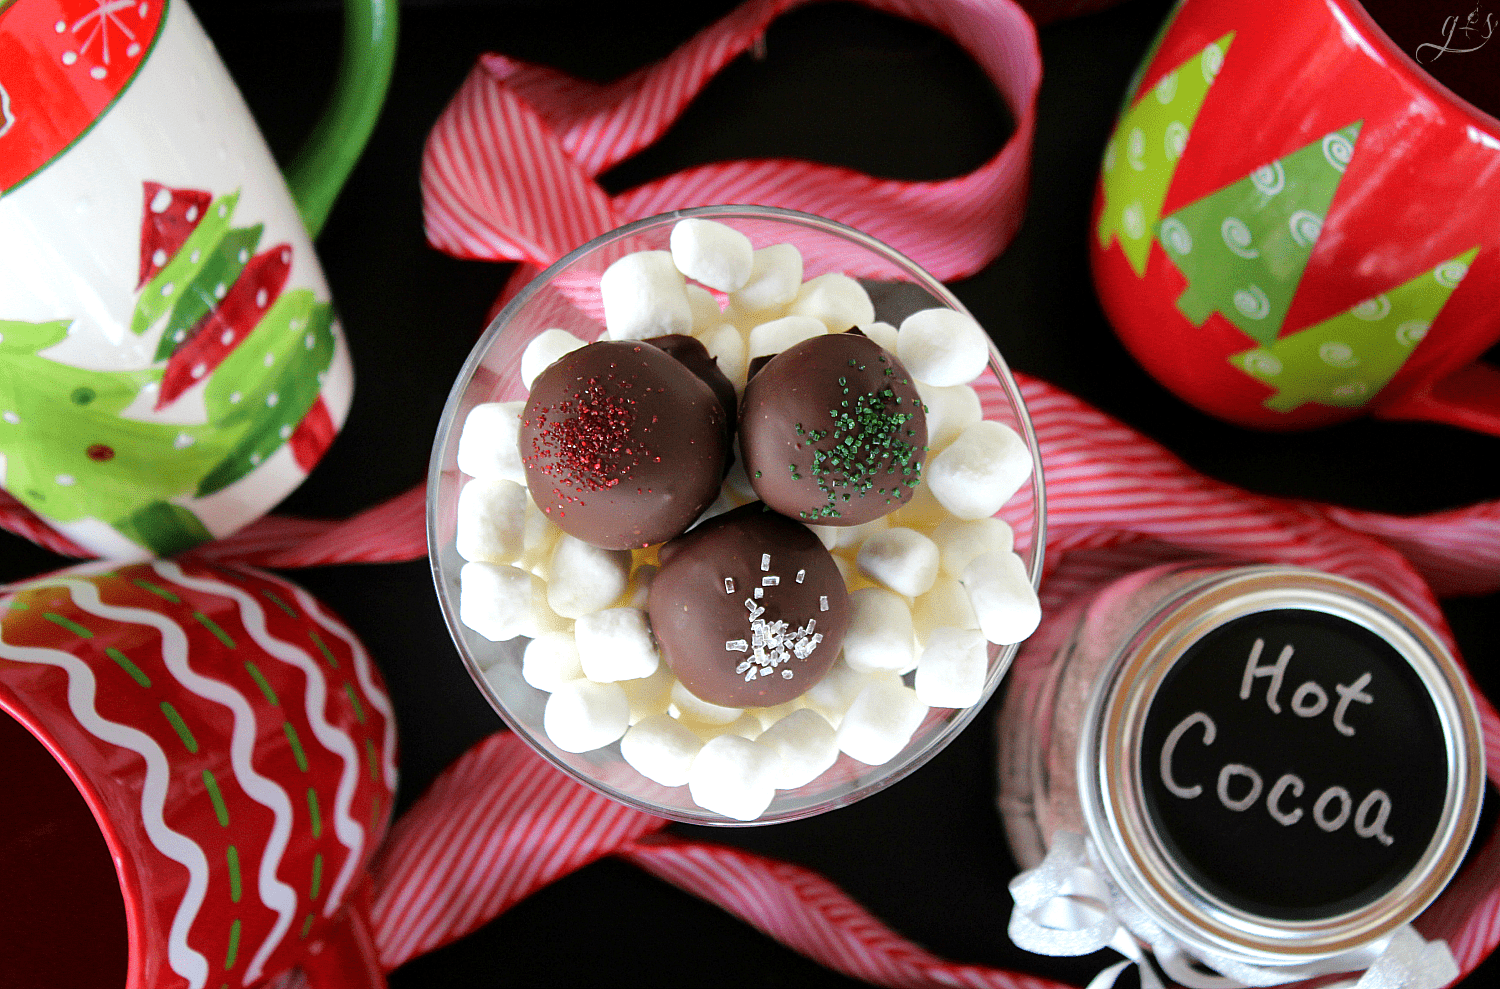 Three beautiful hot cocoa truffles on a bed of mini marshmallows.